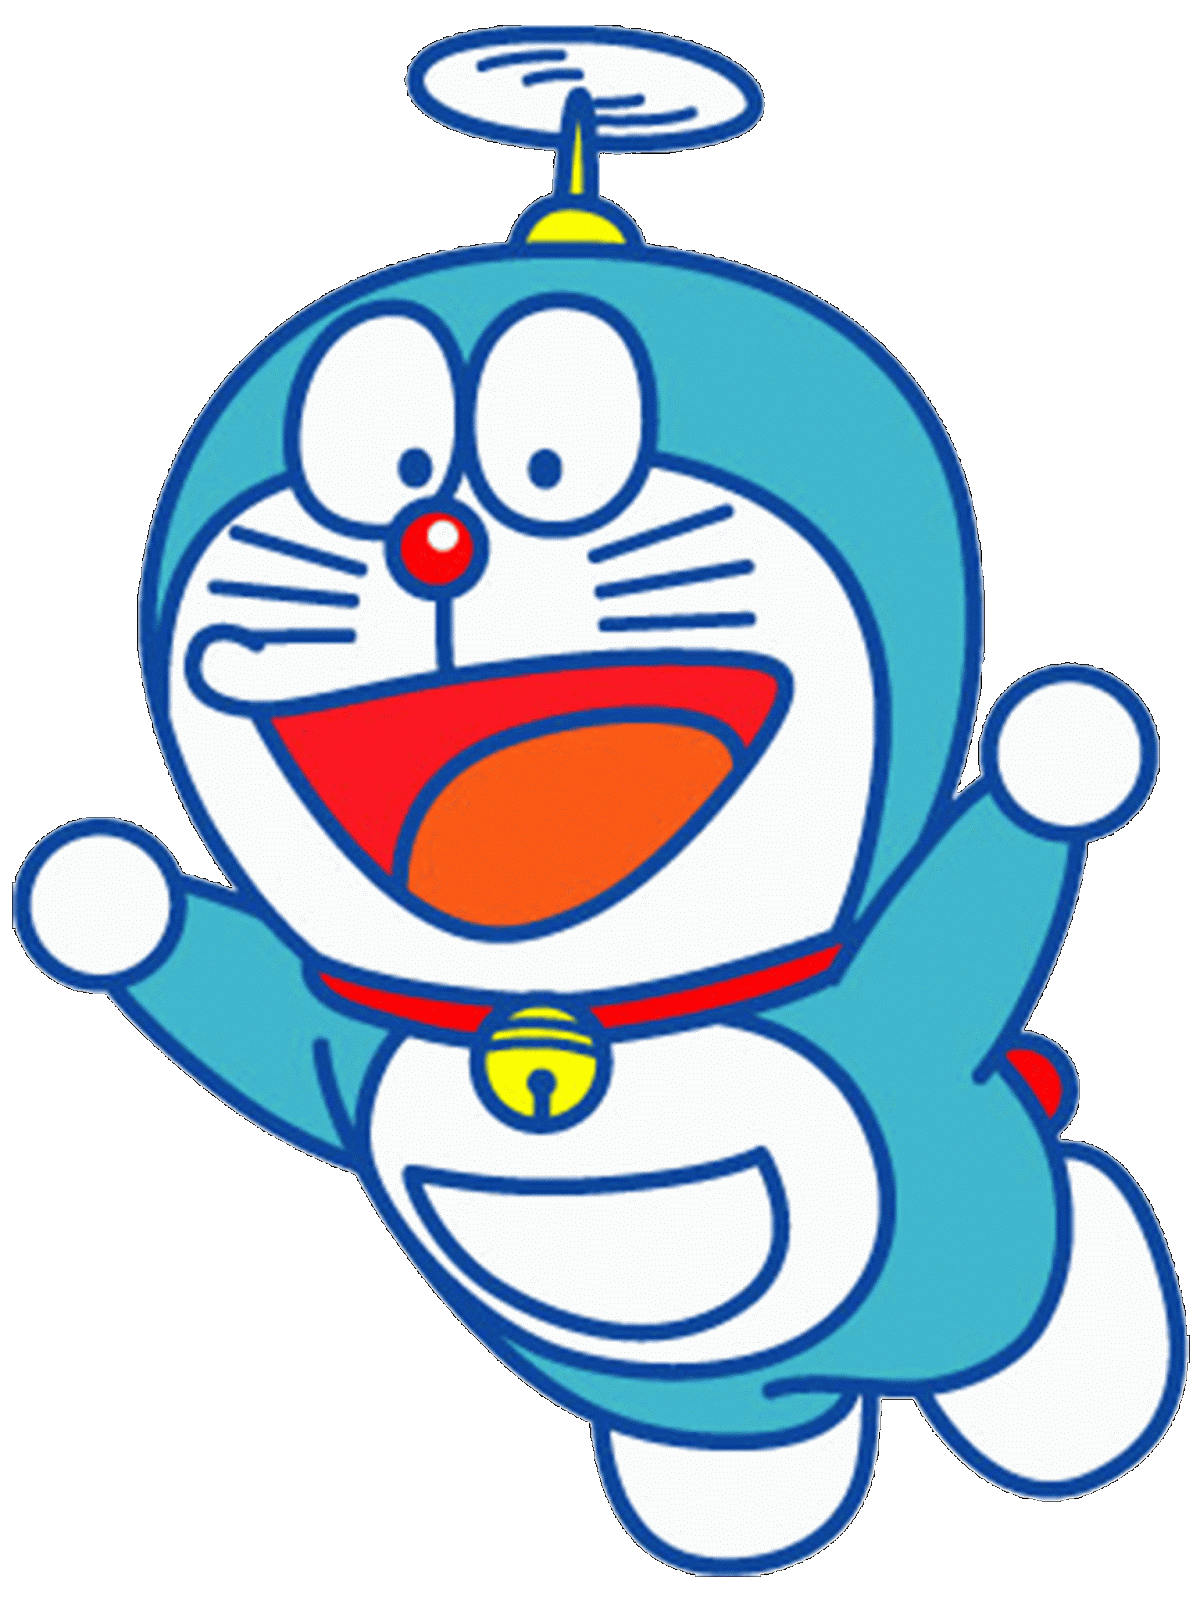 Koleksi Gambar Animasi Bergerak Lucu Doraemon Terbaru 2018 Sapawarga